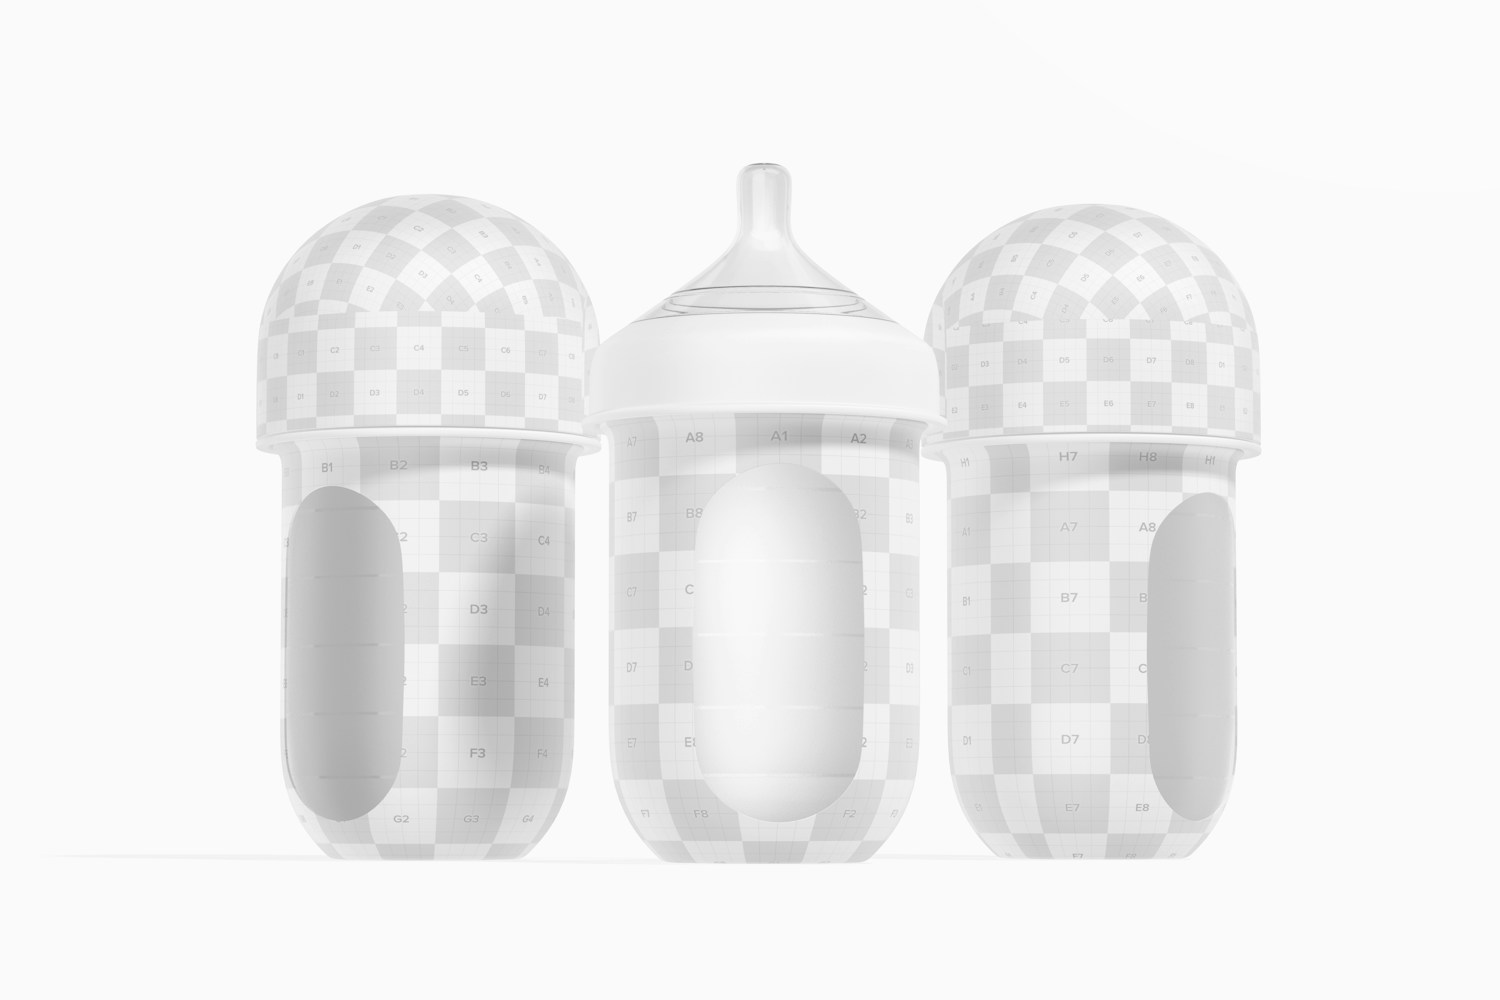 8 oz Silicone Baby Milk Bottles Mockup